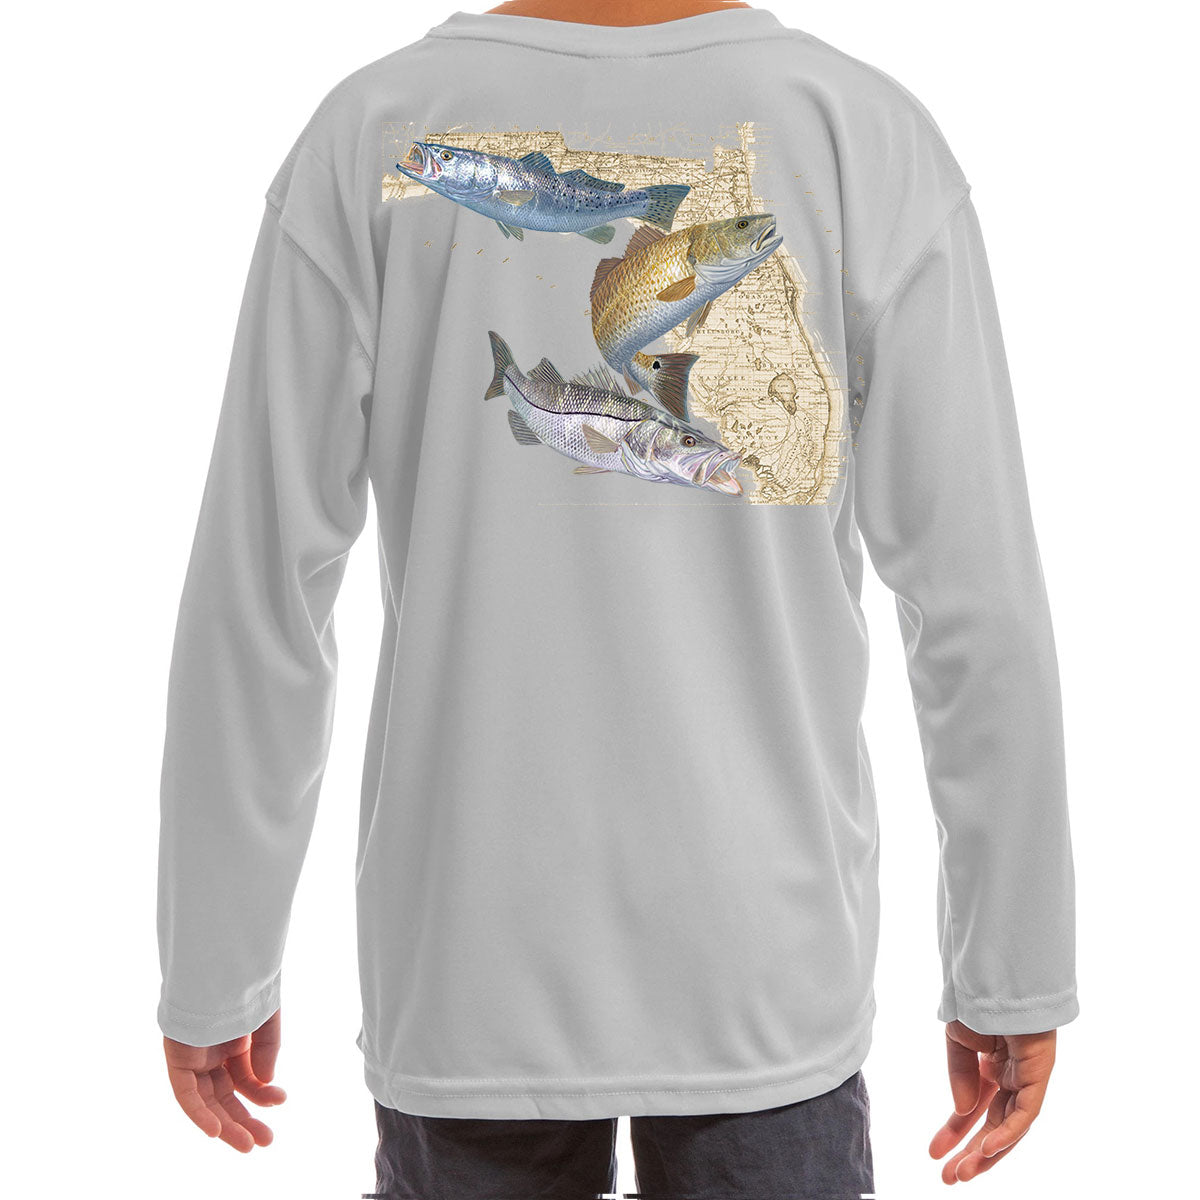 Fishing Apparel Summer Outdoor KIDs Long Sleeve T-Shirt Fish Shirt